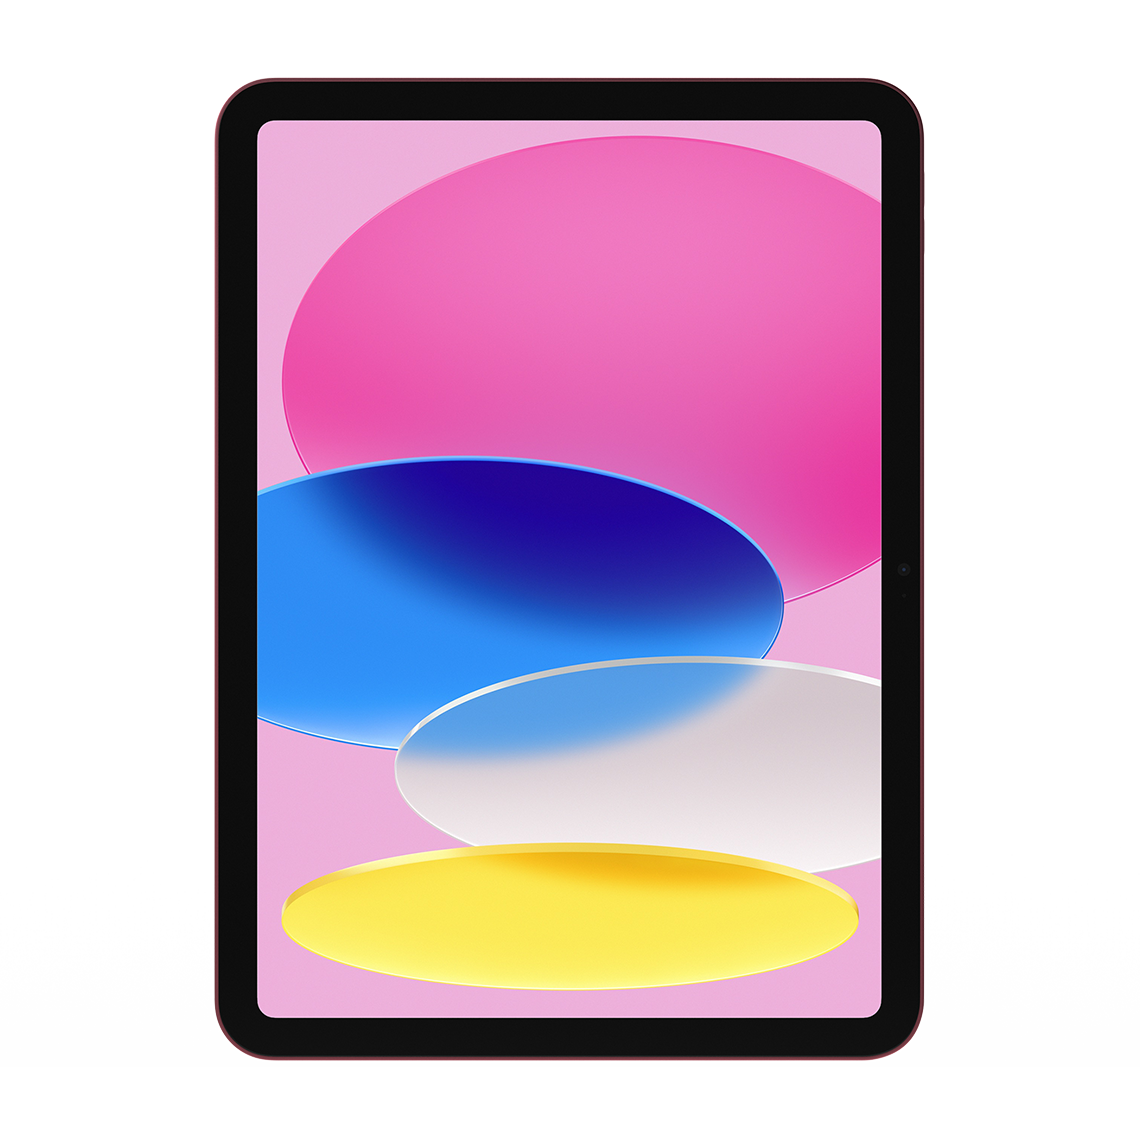 Apple iPad 10.9-inch 10th Generation - Pink - 256GB, Wi-Fi + Cellular, Grade A